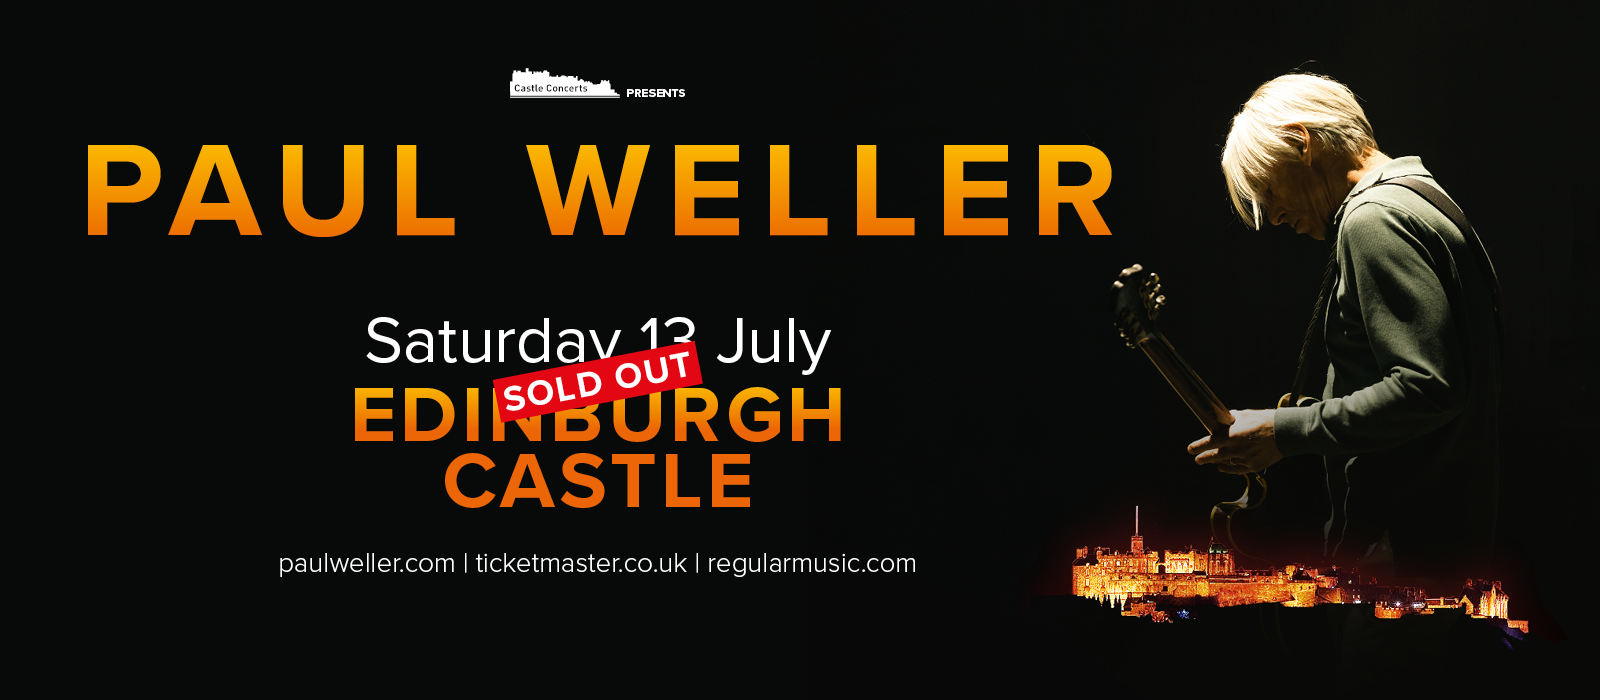 Paul Weller Saturday 13th July Edinburgh Castle Sold Out